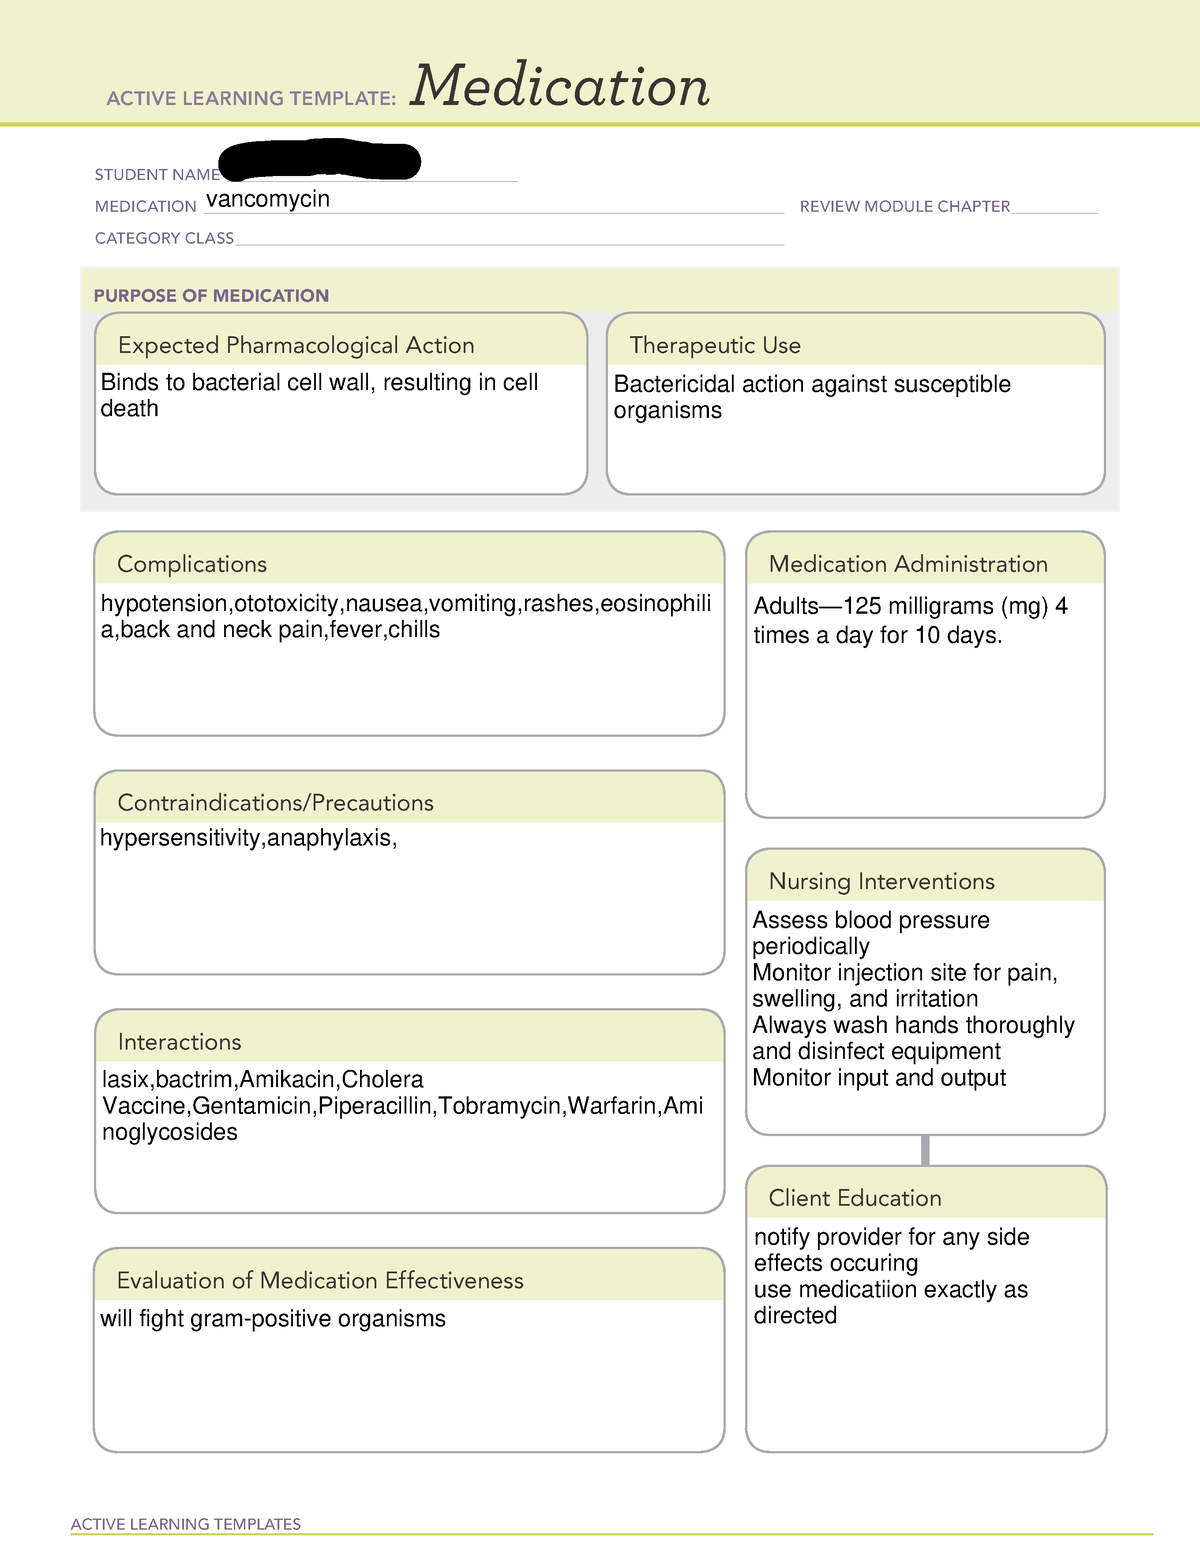 vancomycin-medication-template